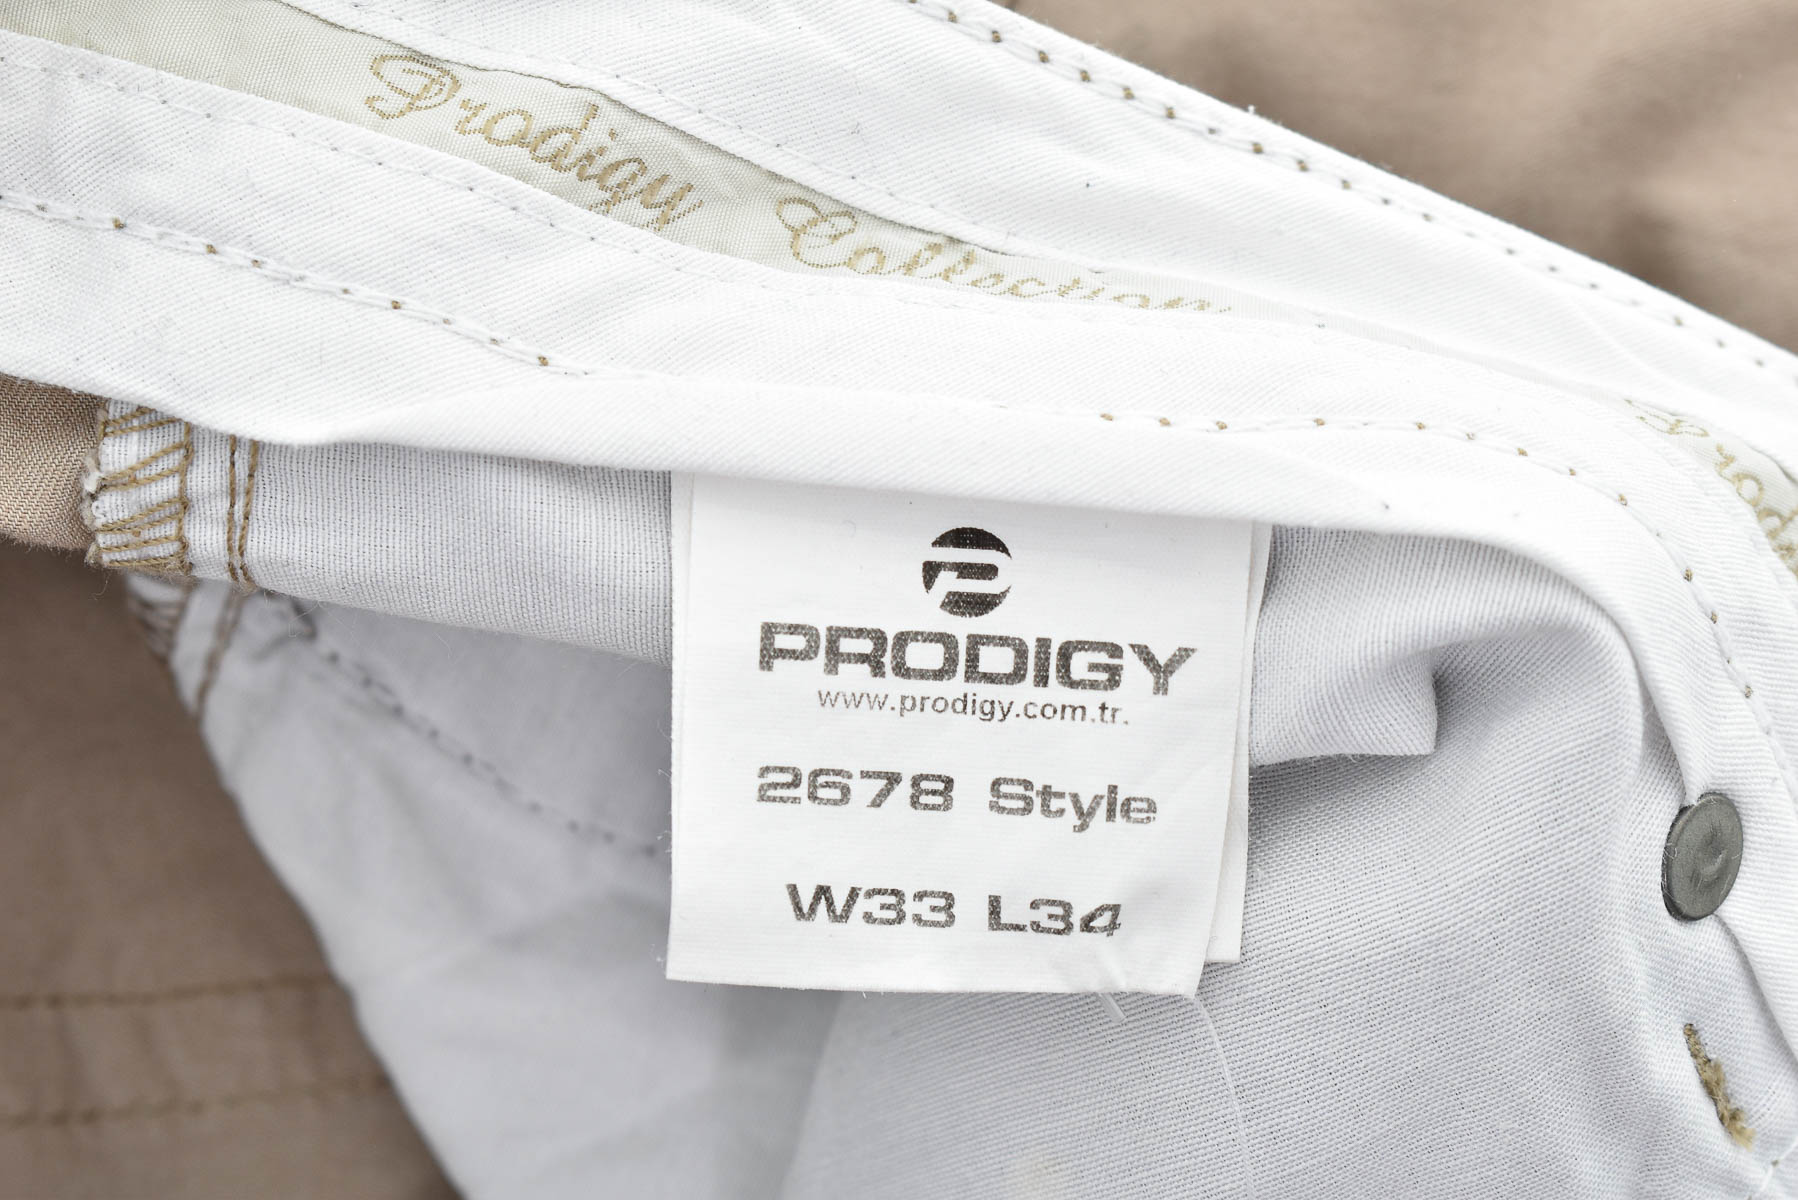 Men's trousers - Prodigy - 2